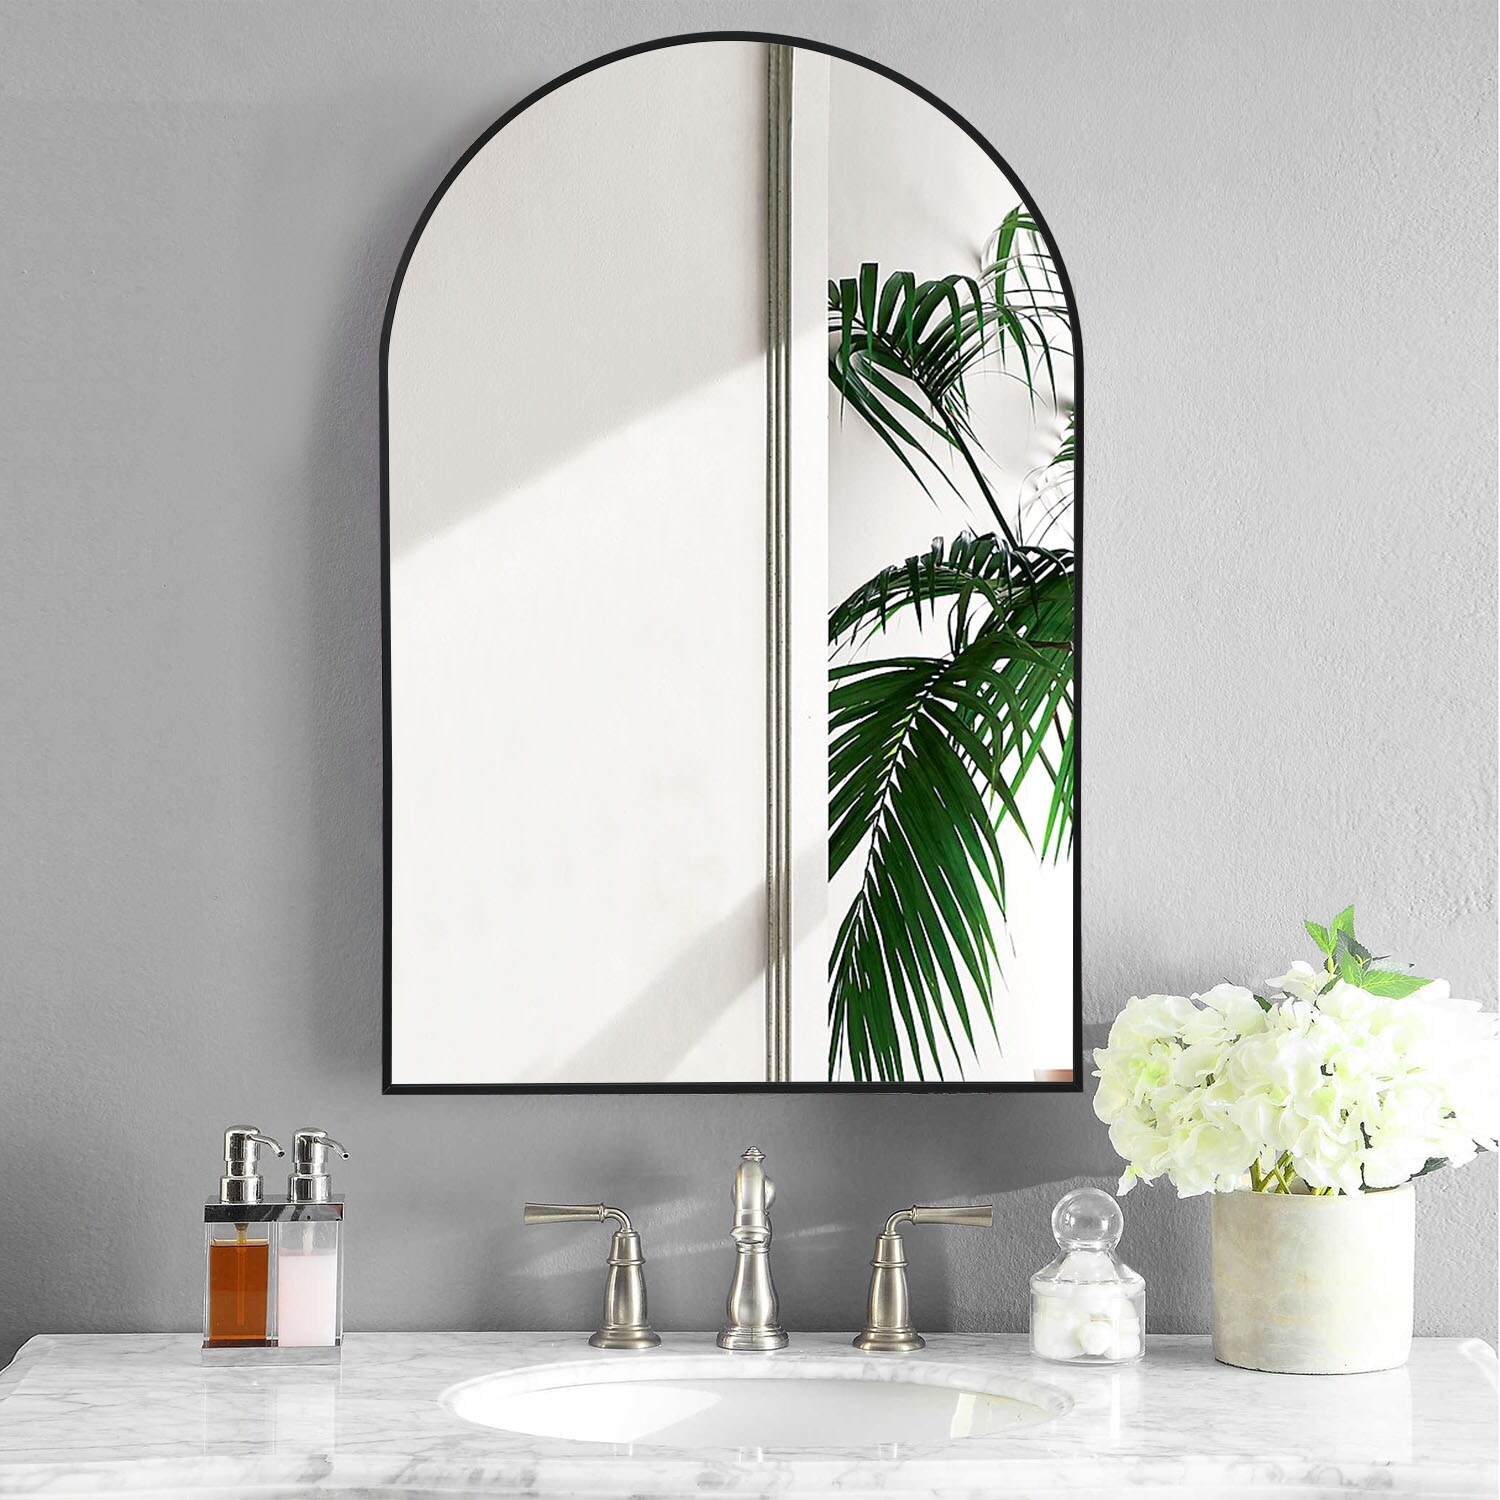 Hanging the Vanity Mirror